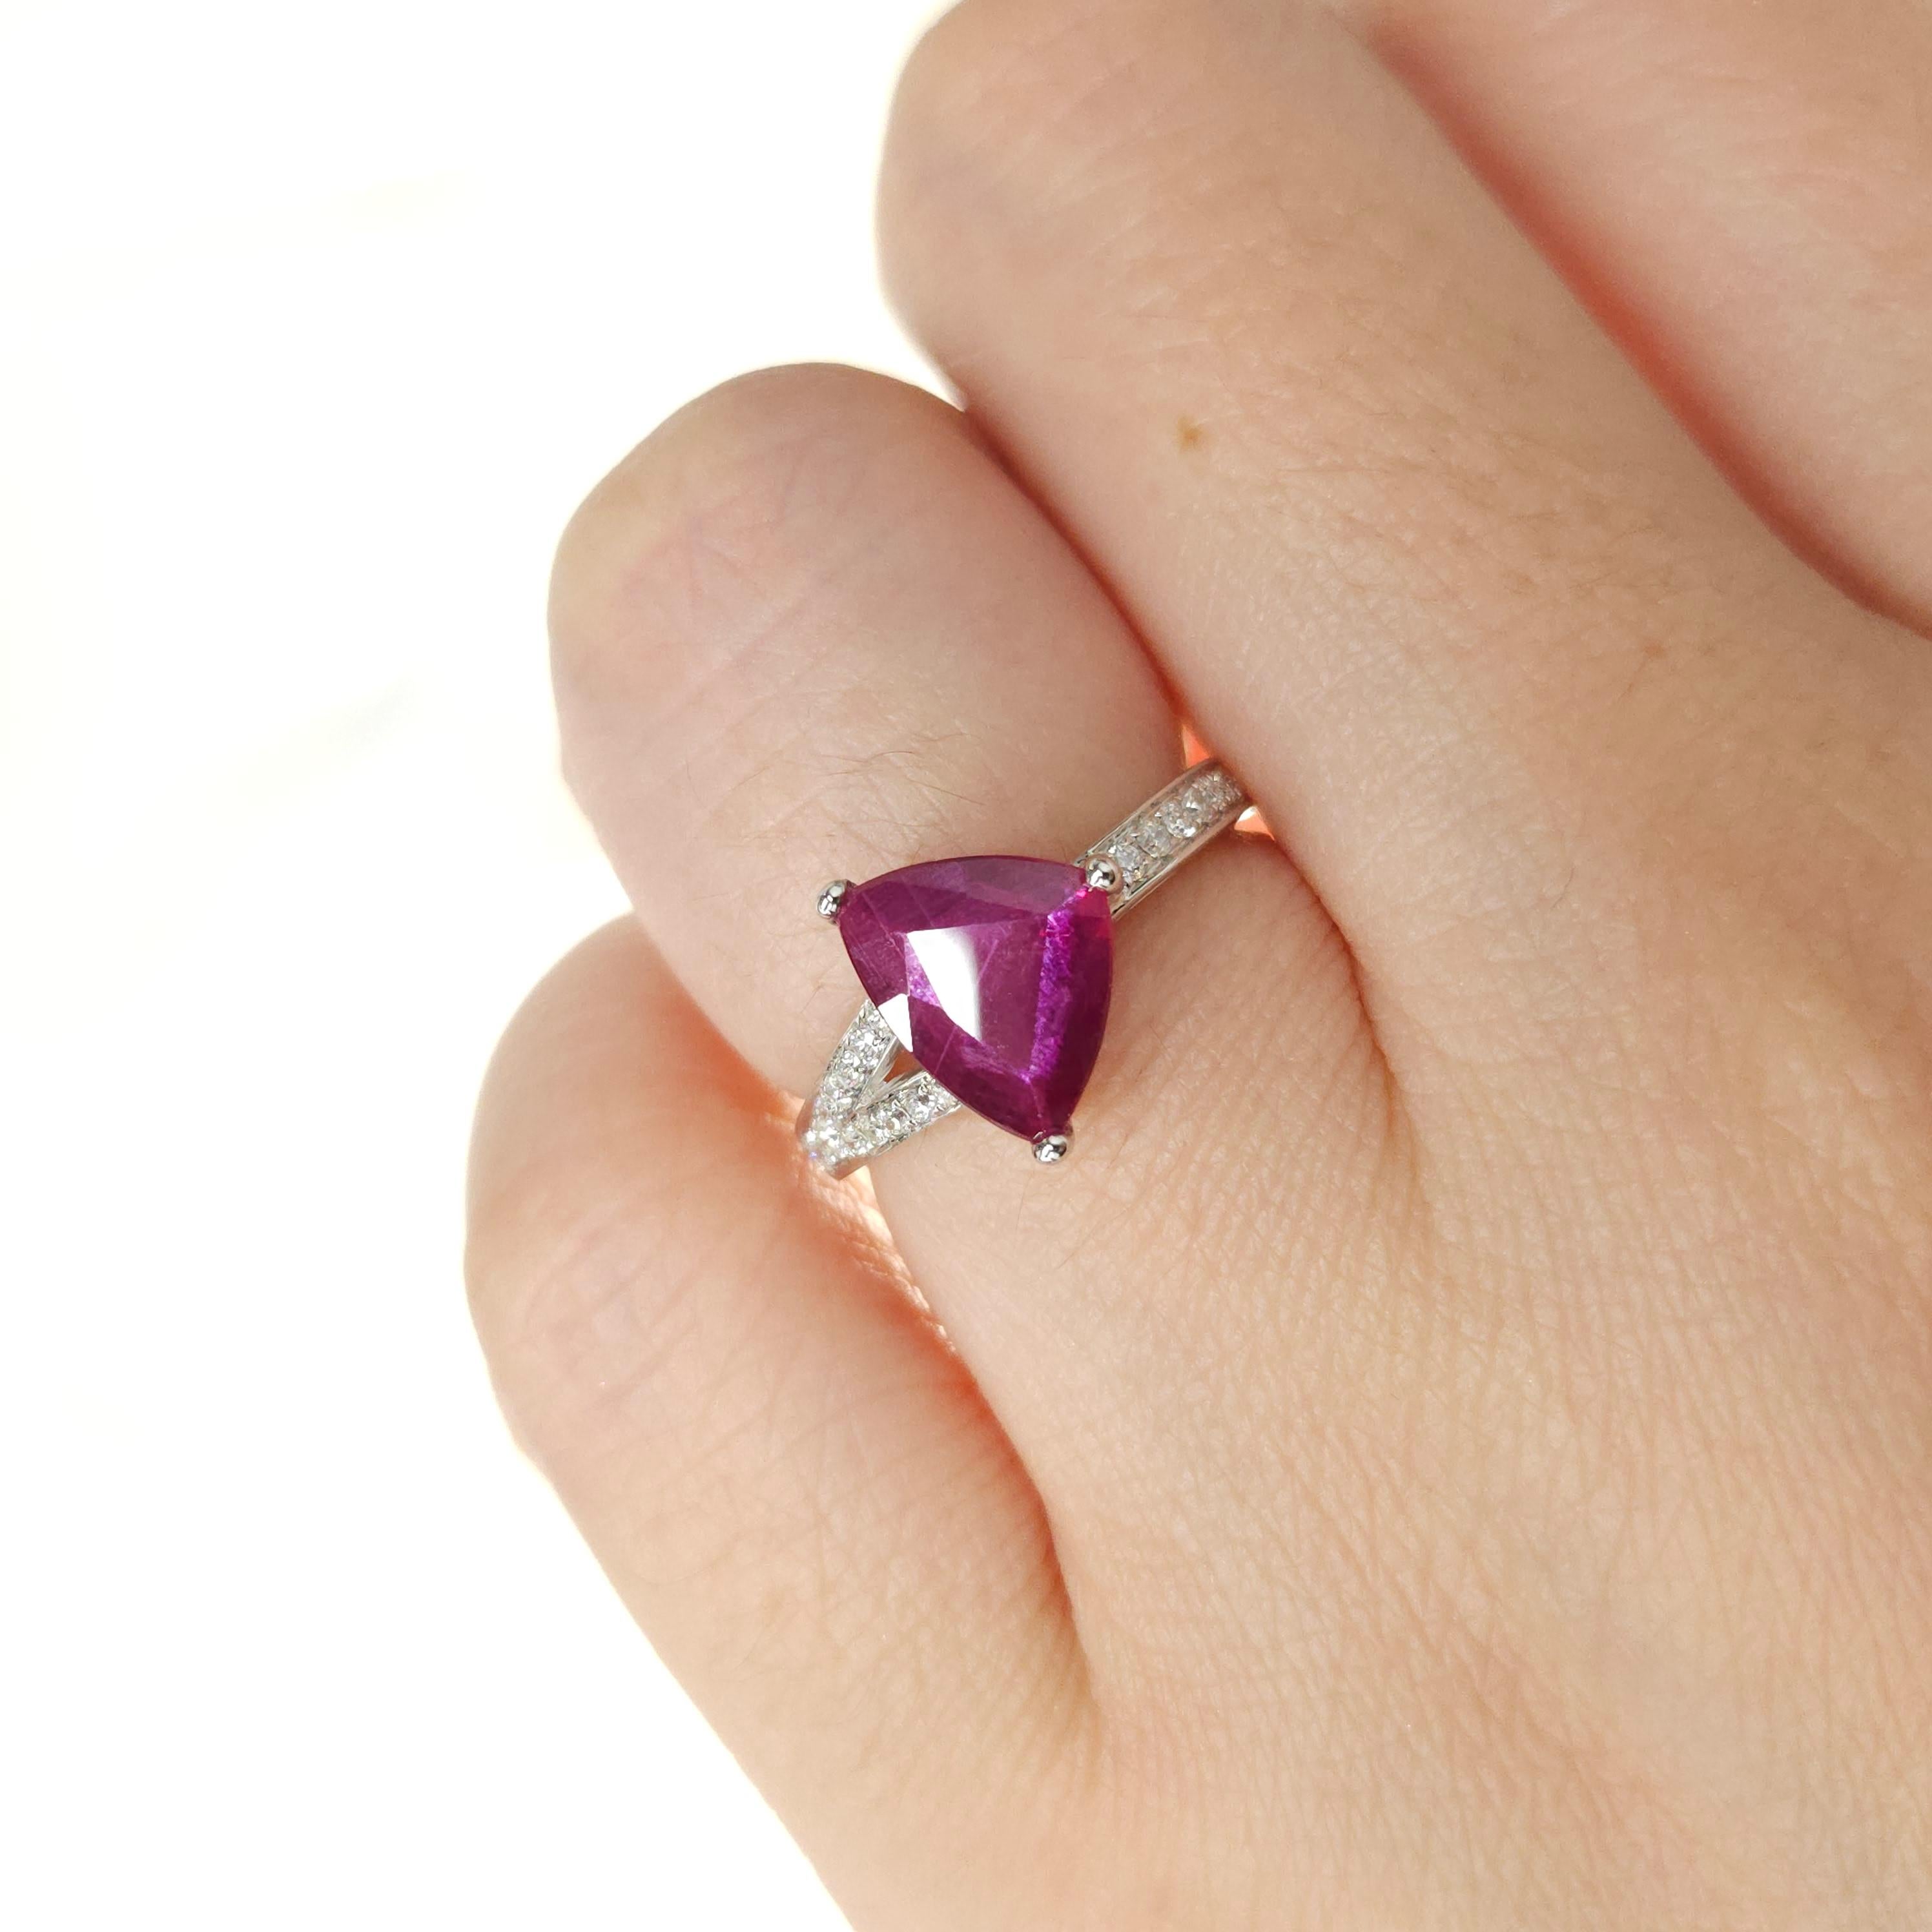 IGI Certified 2.09 Carat Ruby & Diamond Ring in 18K White Gold For Sale 1